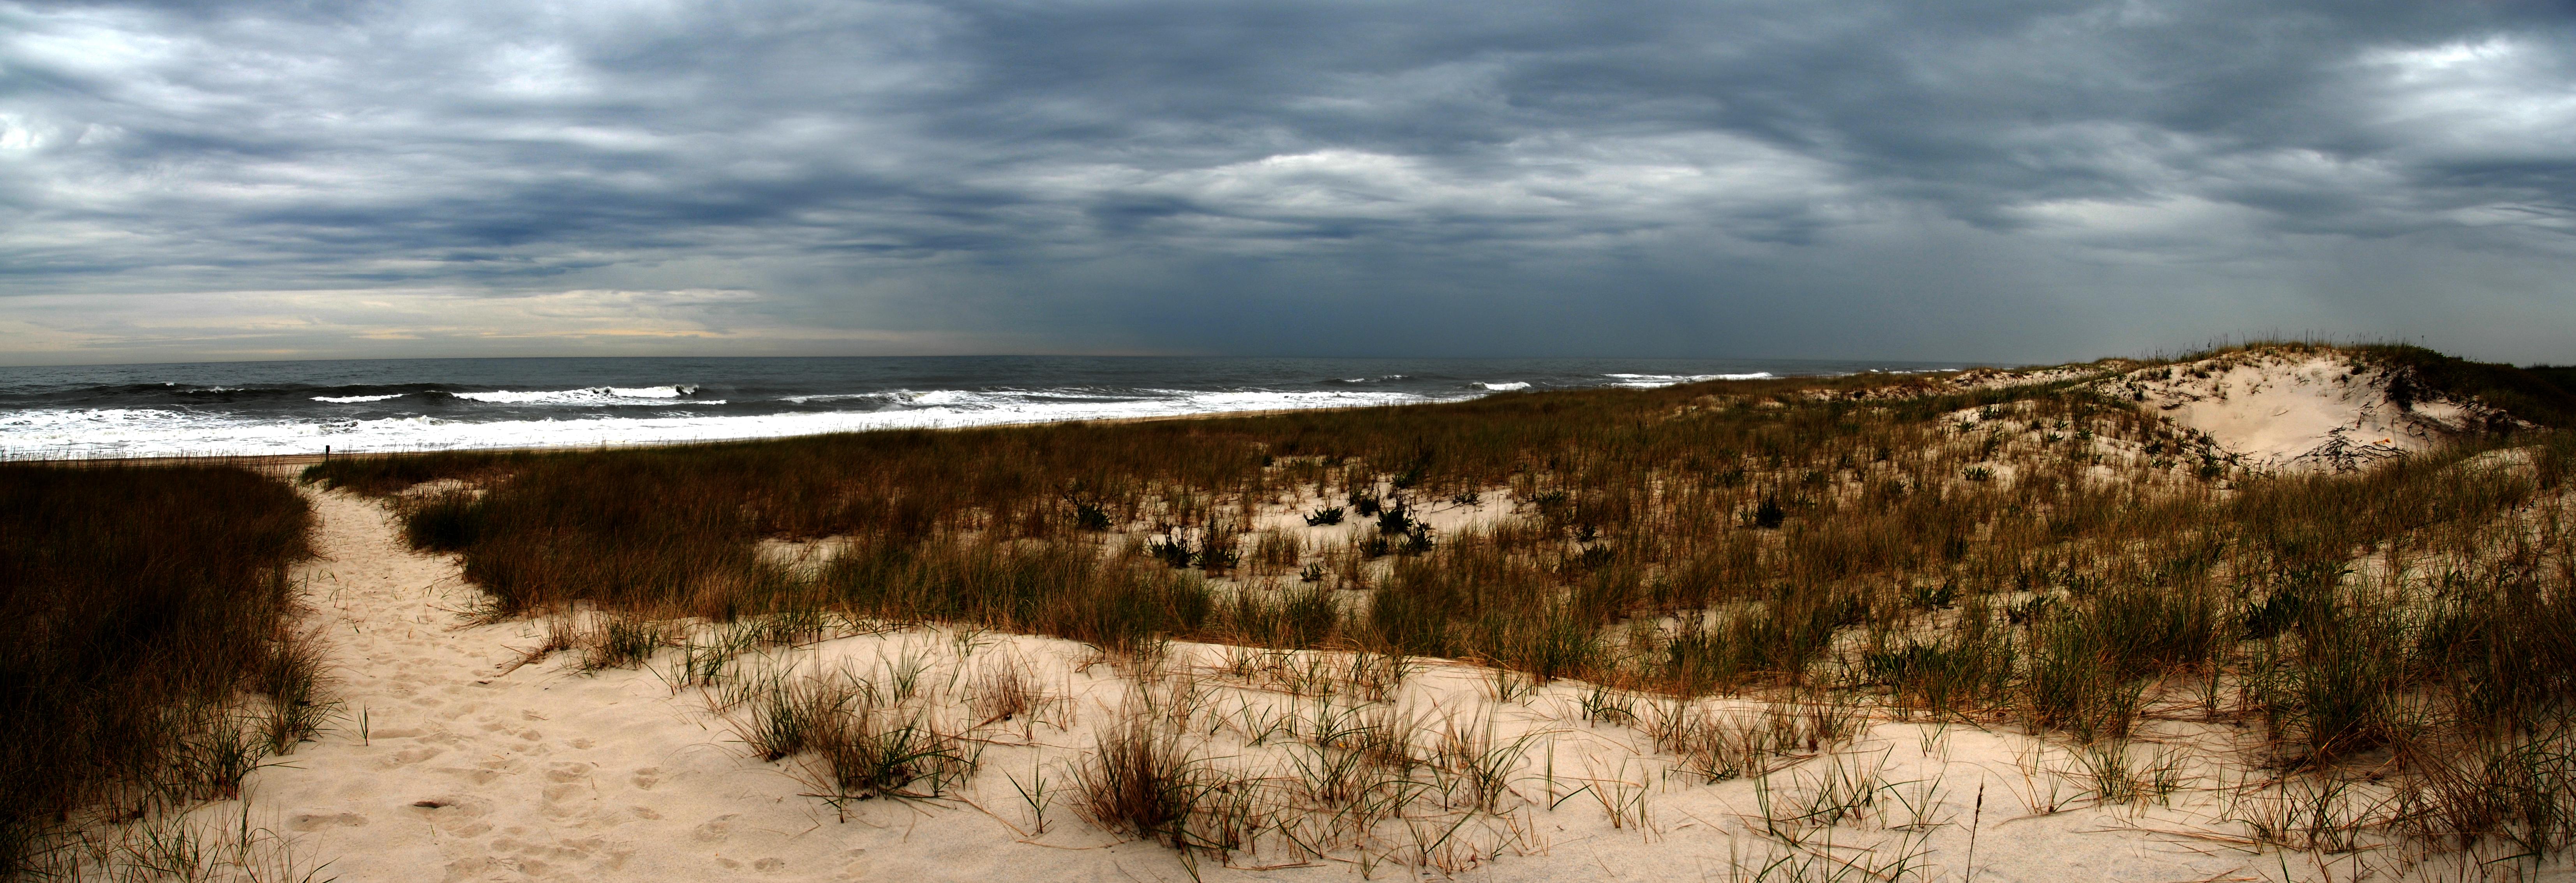 beach, dunes, ocean, panoramic, path, rain, sand, storm, waves